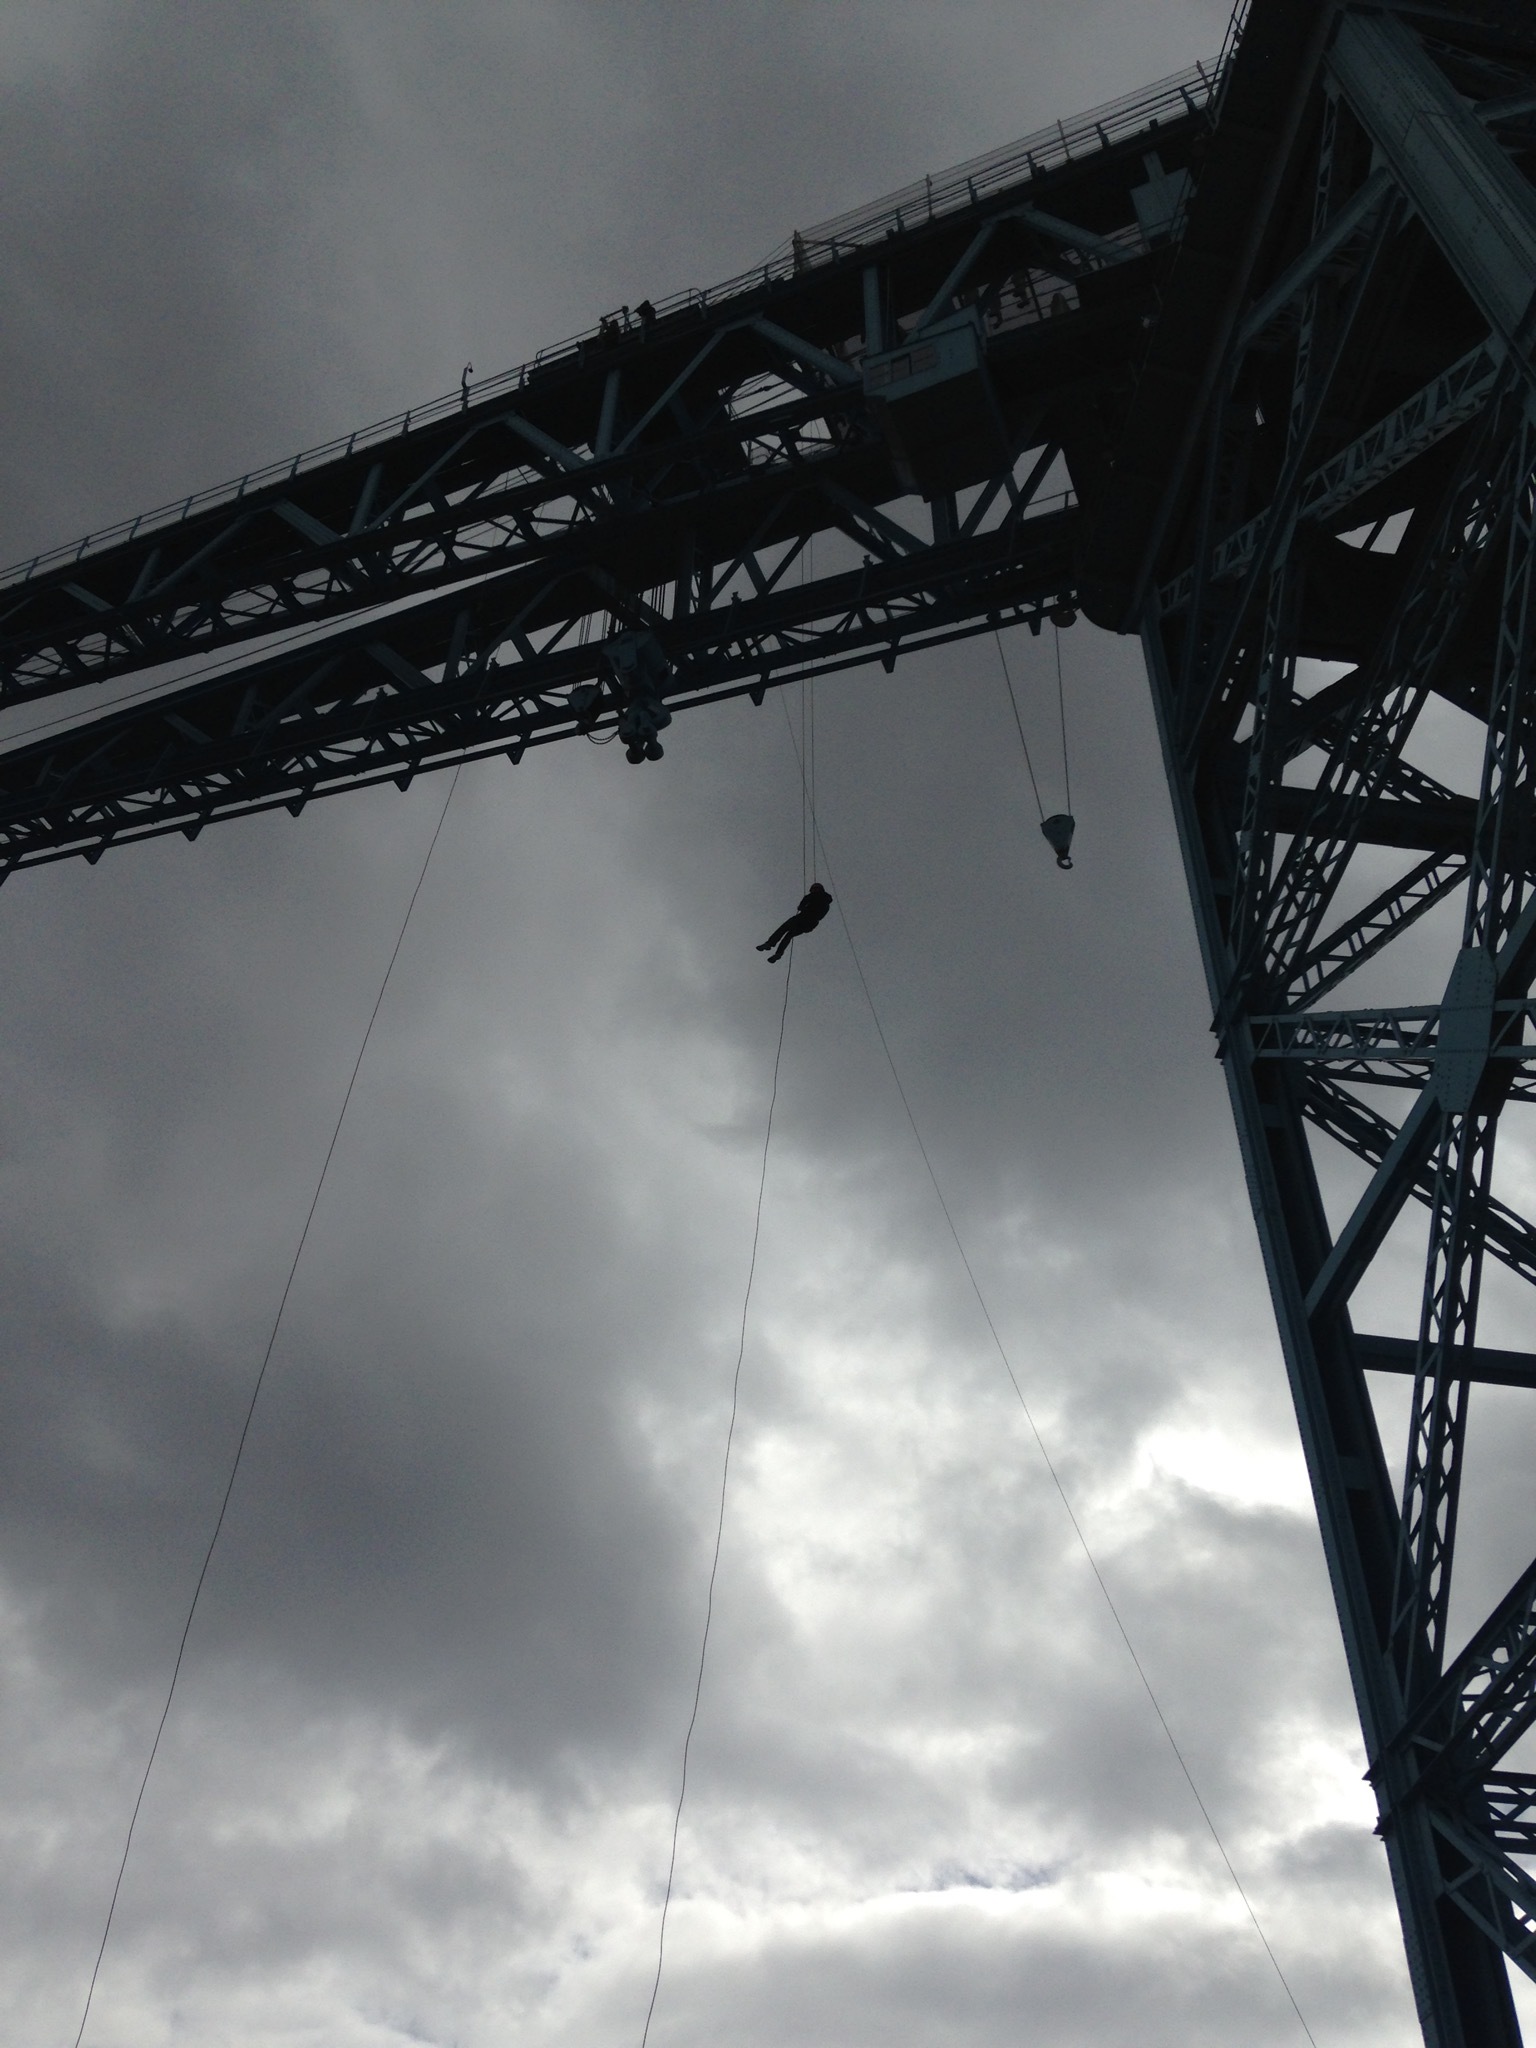 The Titan crane in Glasgow